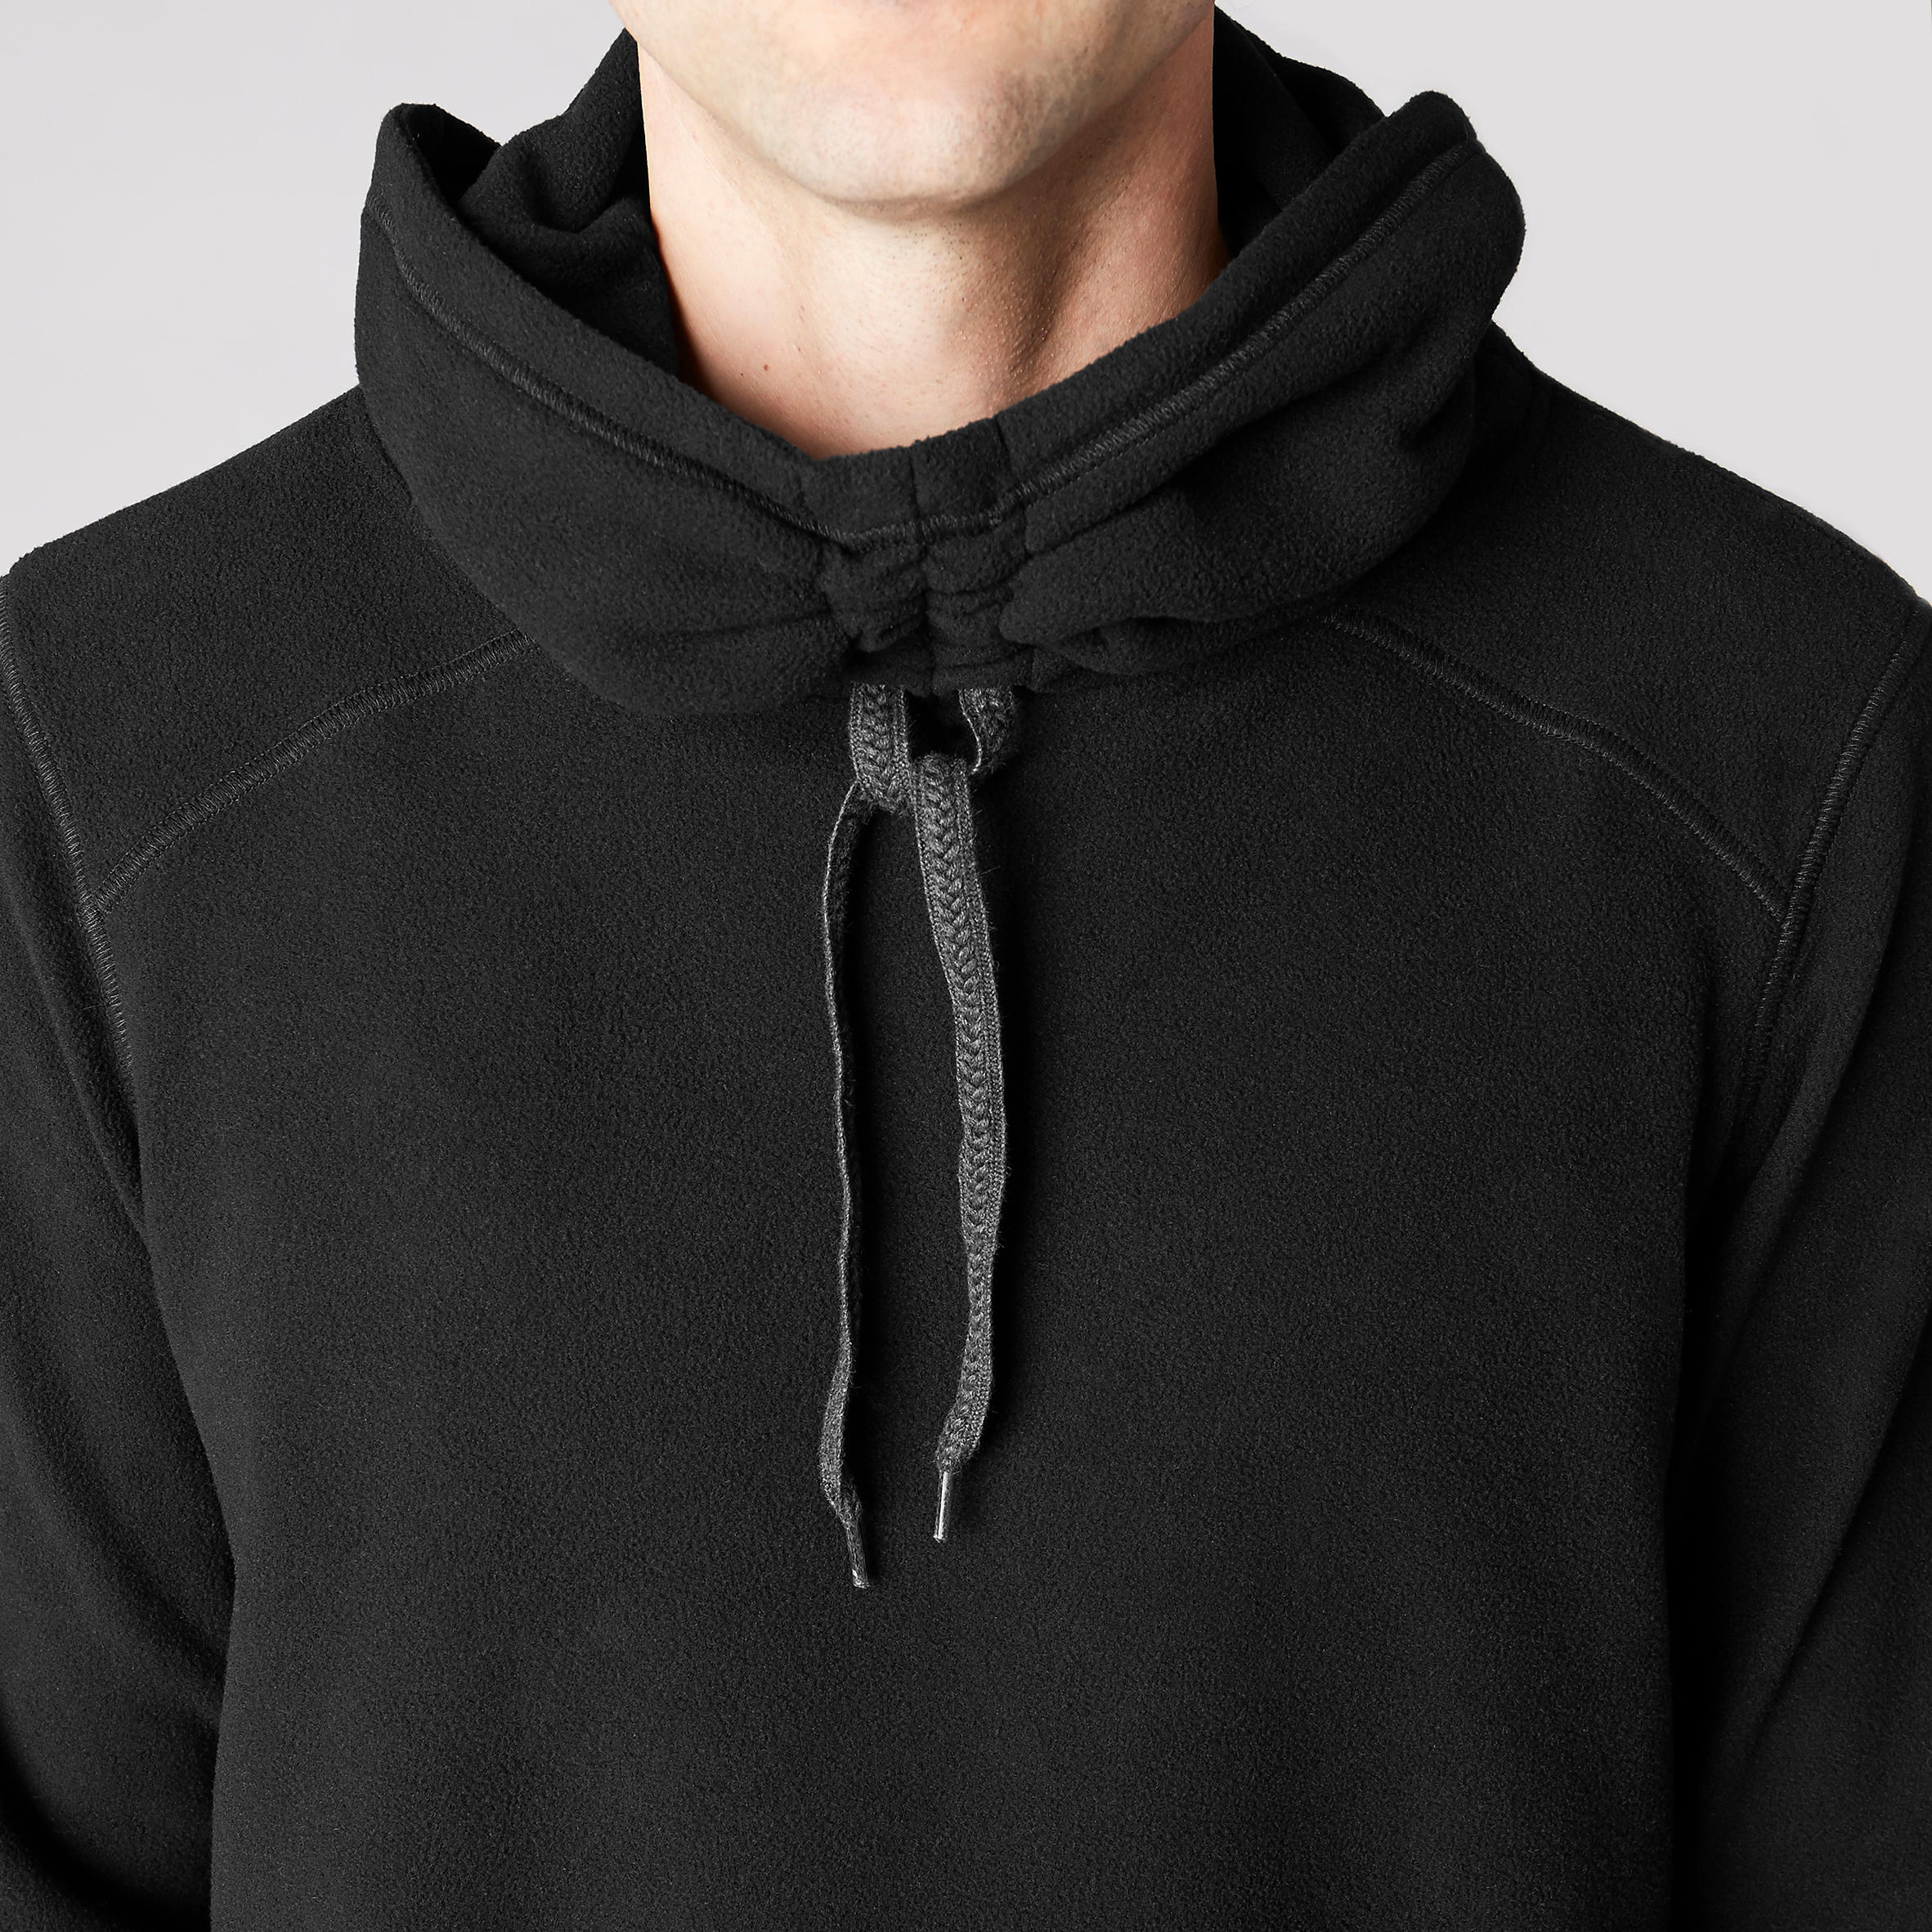 Men's Fleece Yoga Sweatshirt - Black 6/8